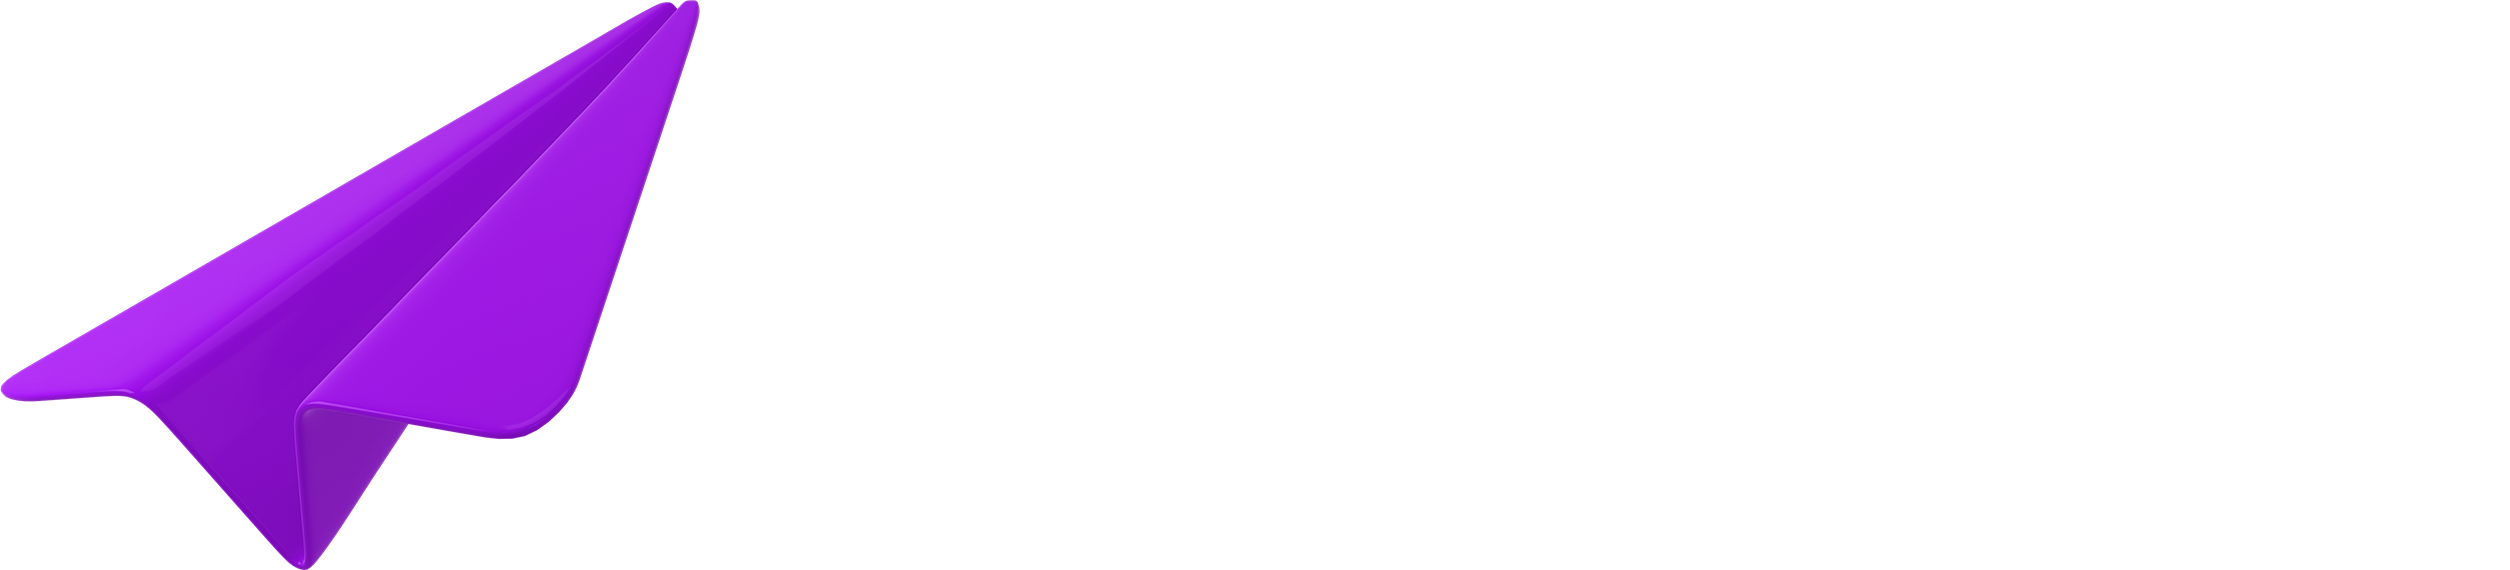 JetPost